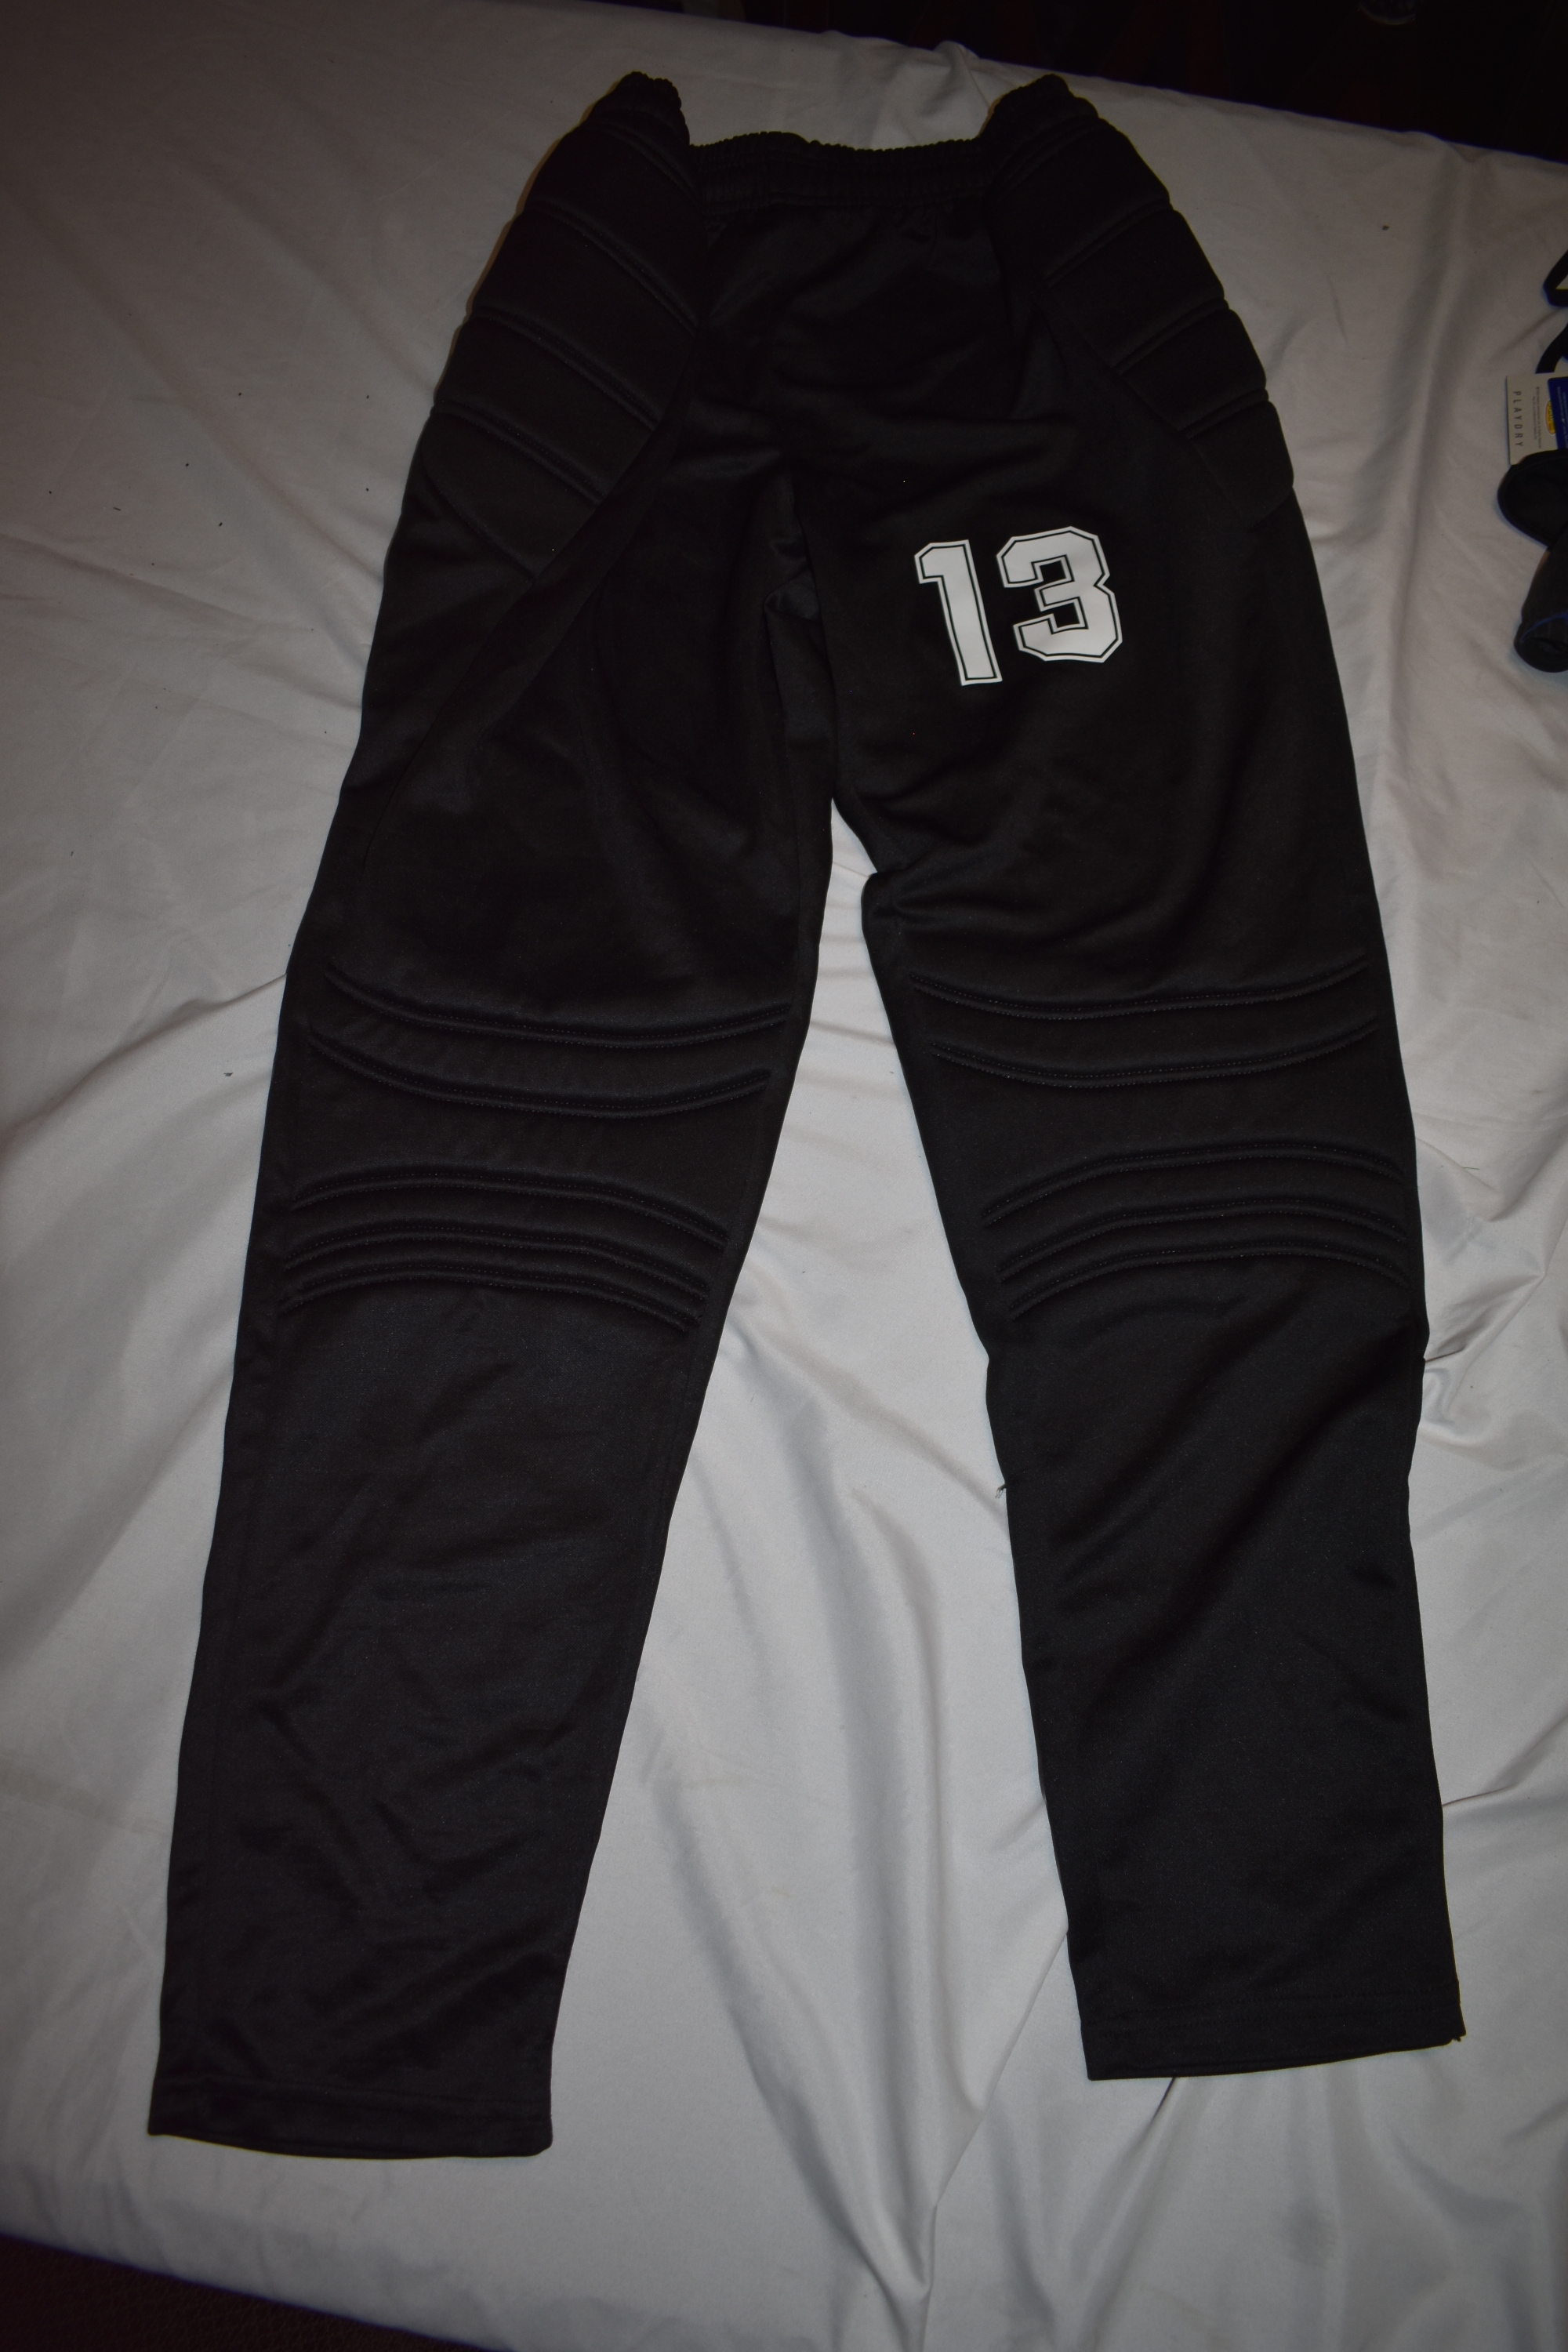 Soccer #13 Goalie Bottoms, Black, Adult XL